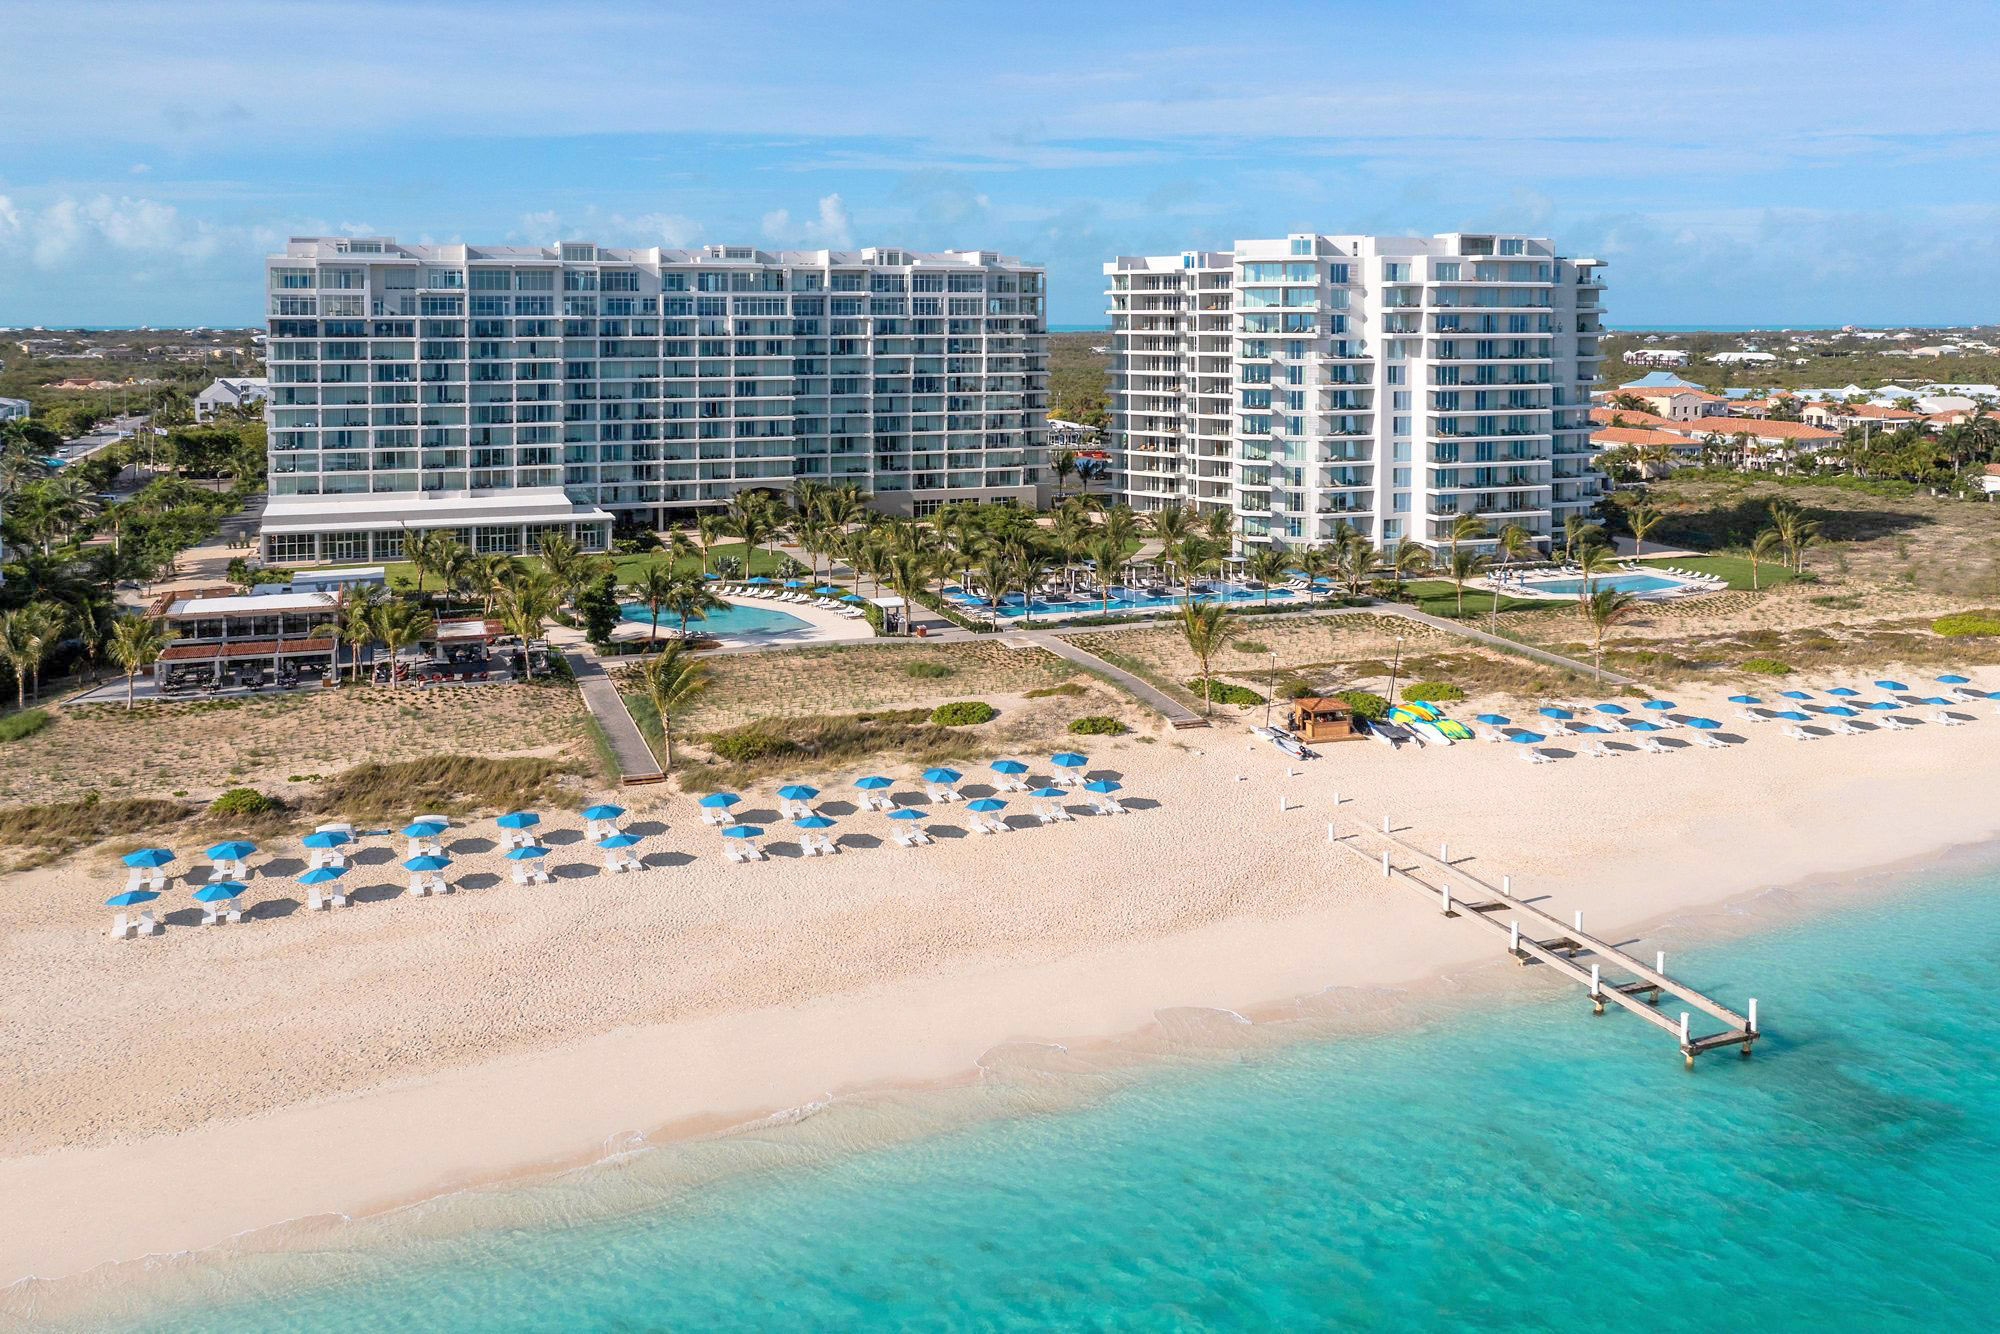 The Ritz-Carlton, Turks & Caicos Resort - Providenciales, Turks and Caicos Islands - Exterior Aerial View